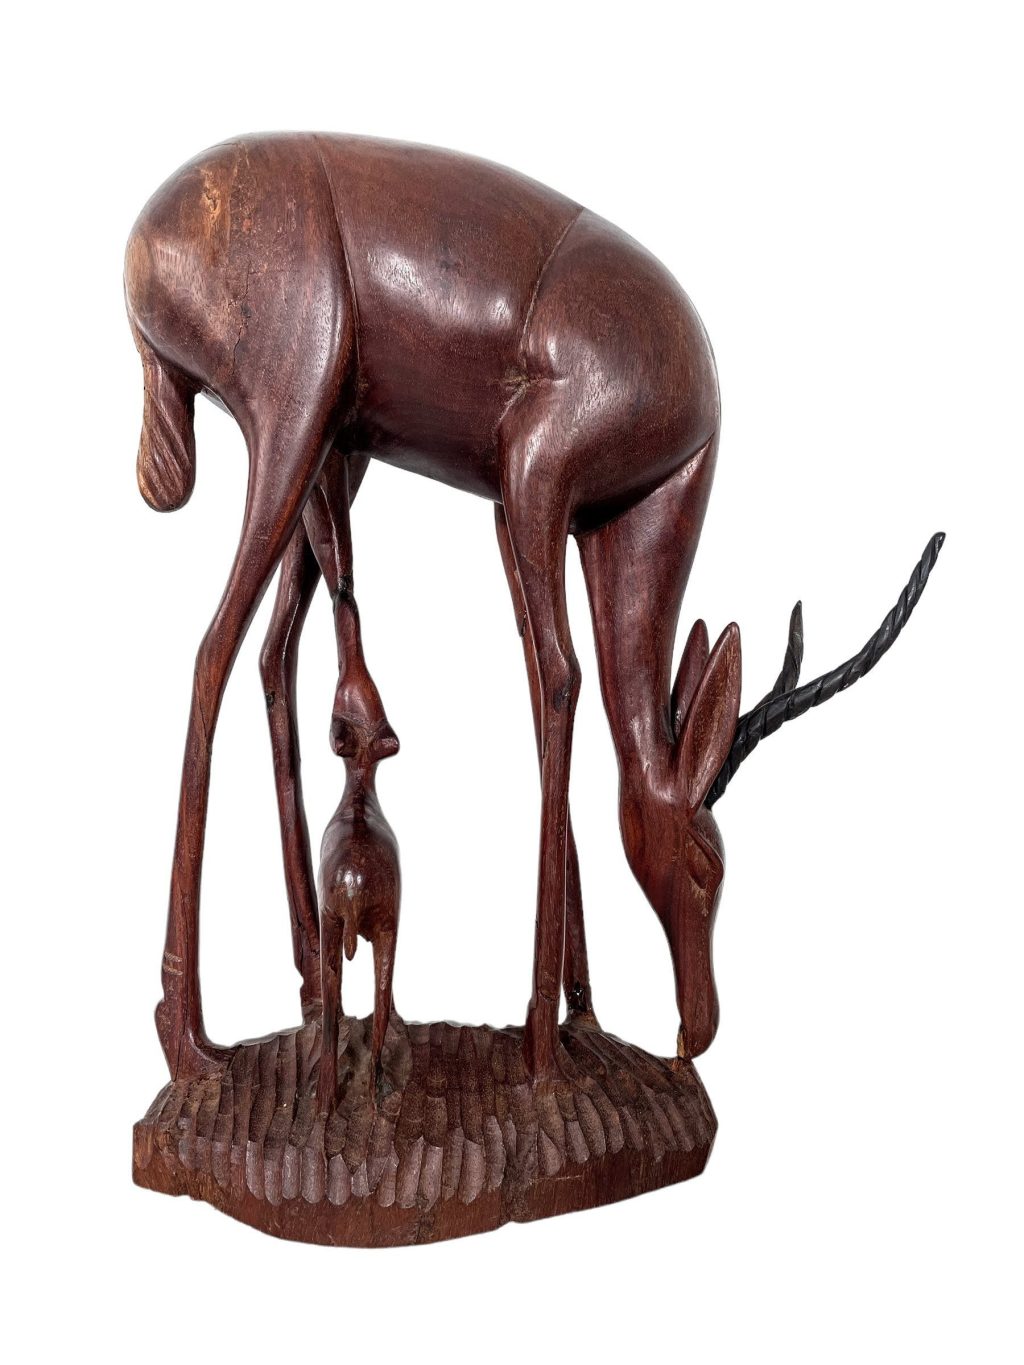 Vintage Large Heavy African Antelope Animal Deer Sculpture Carving Tribal Africa Art Decor Wood Display Fawn c1960-70’s